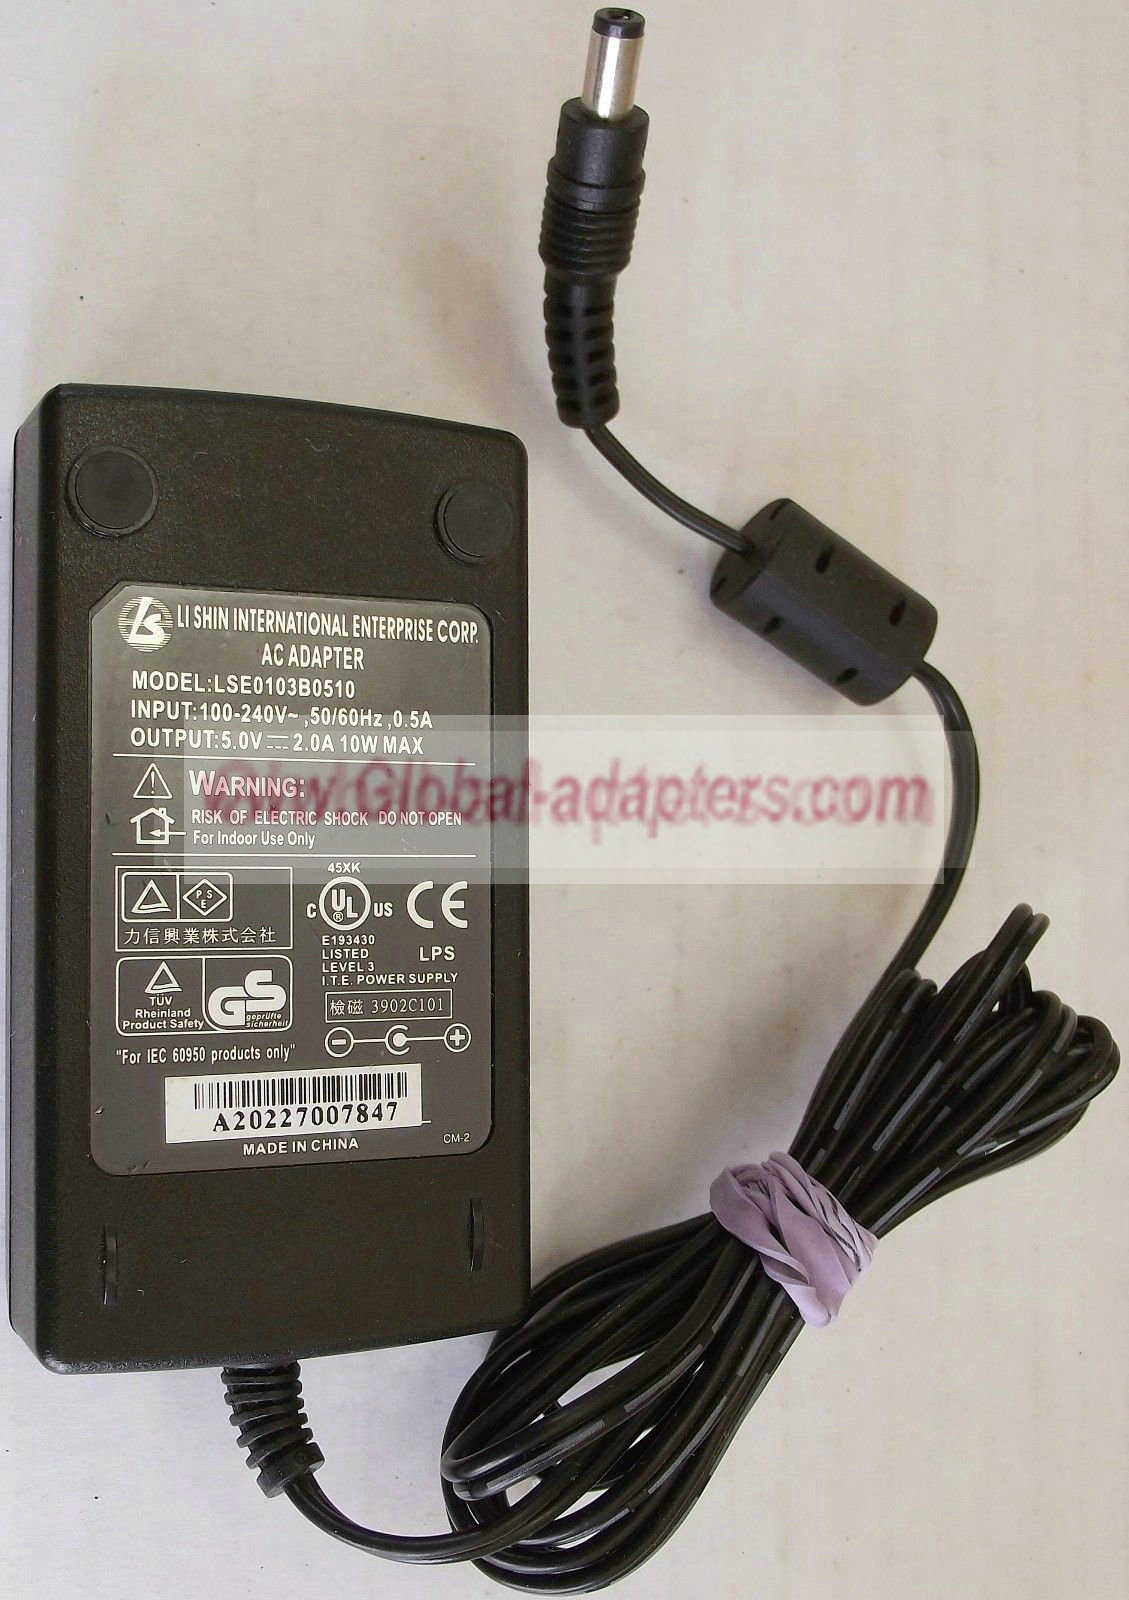 NEW 5V 2A Li Shin International Enterprise LSE0103B0510 AC Adapter